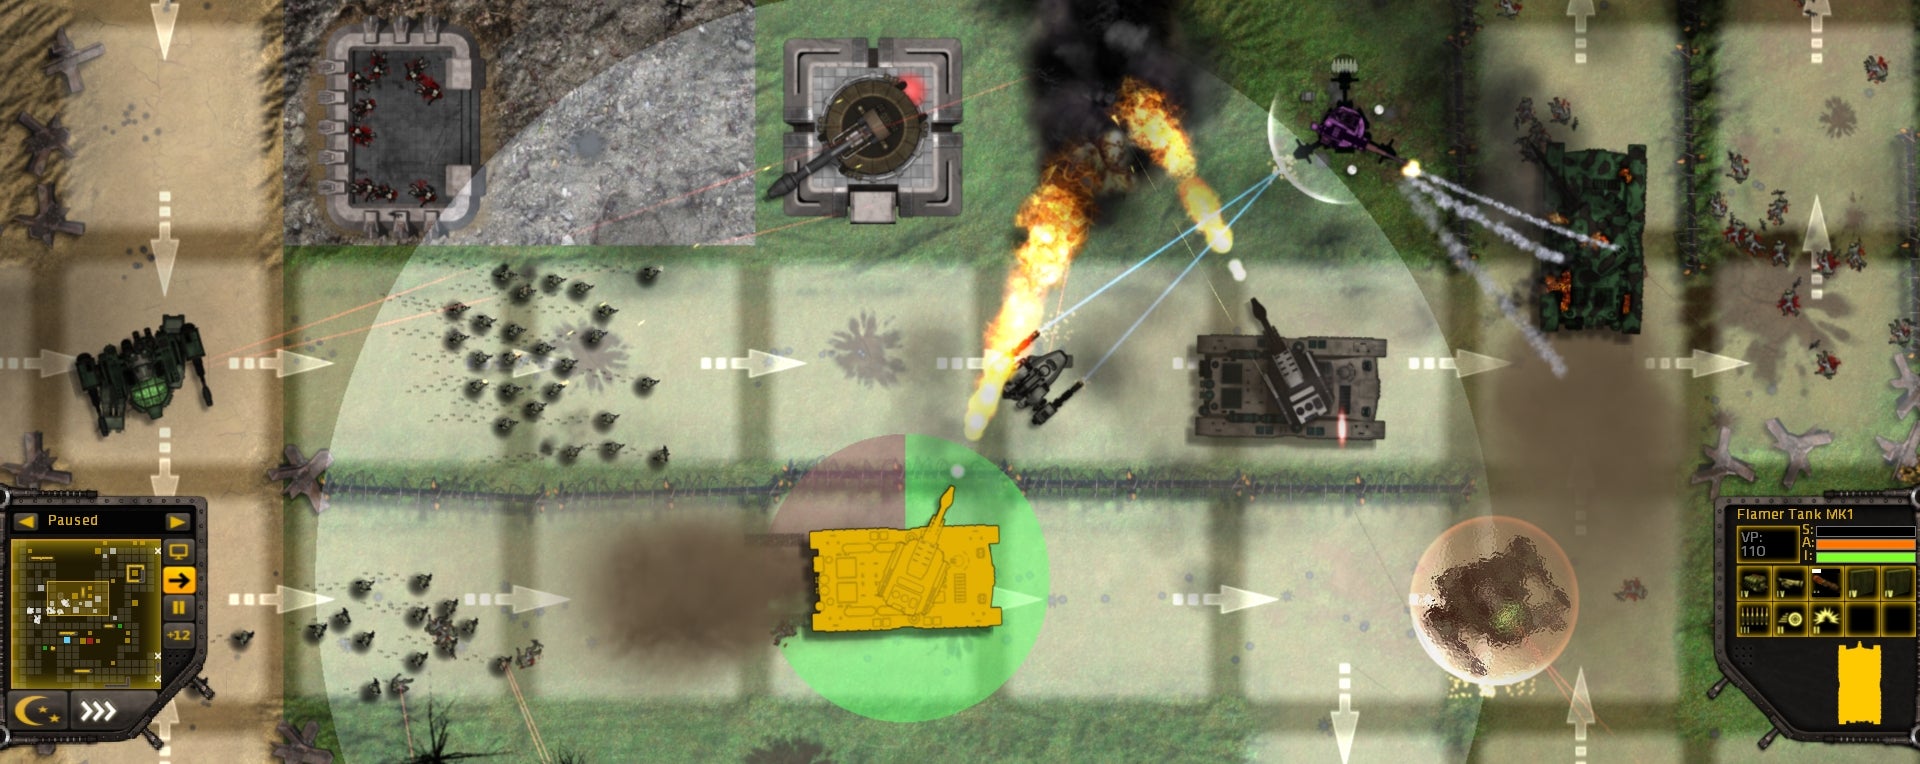 Image for Wot I Think: Gratuitous Tank Battles